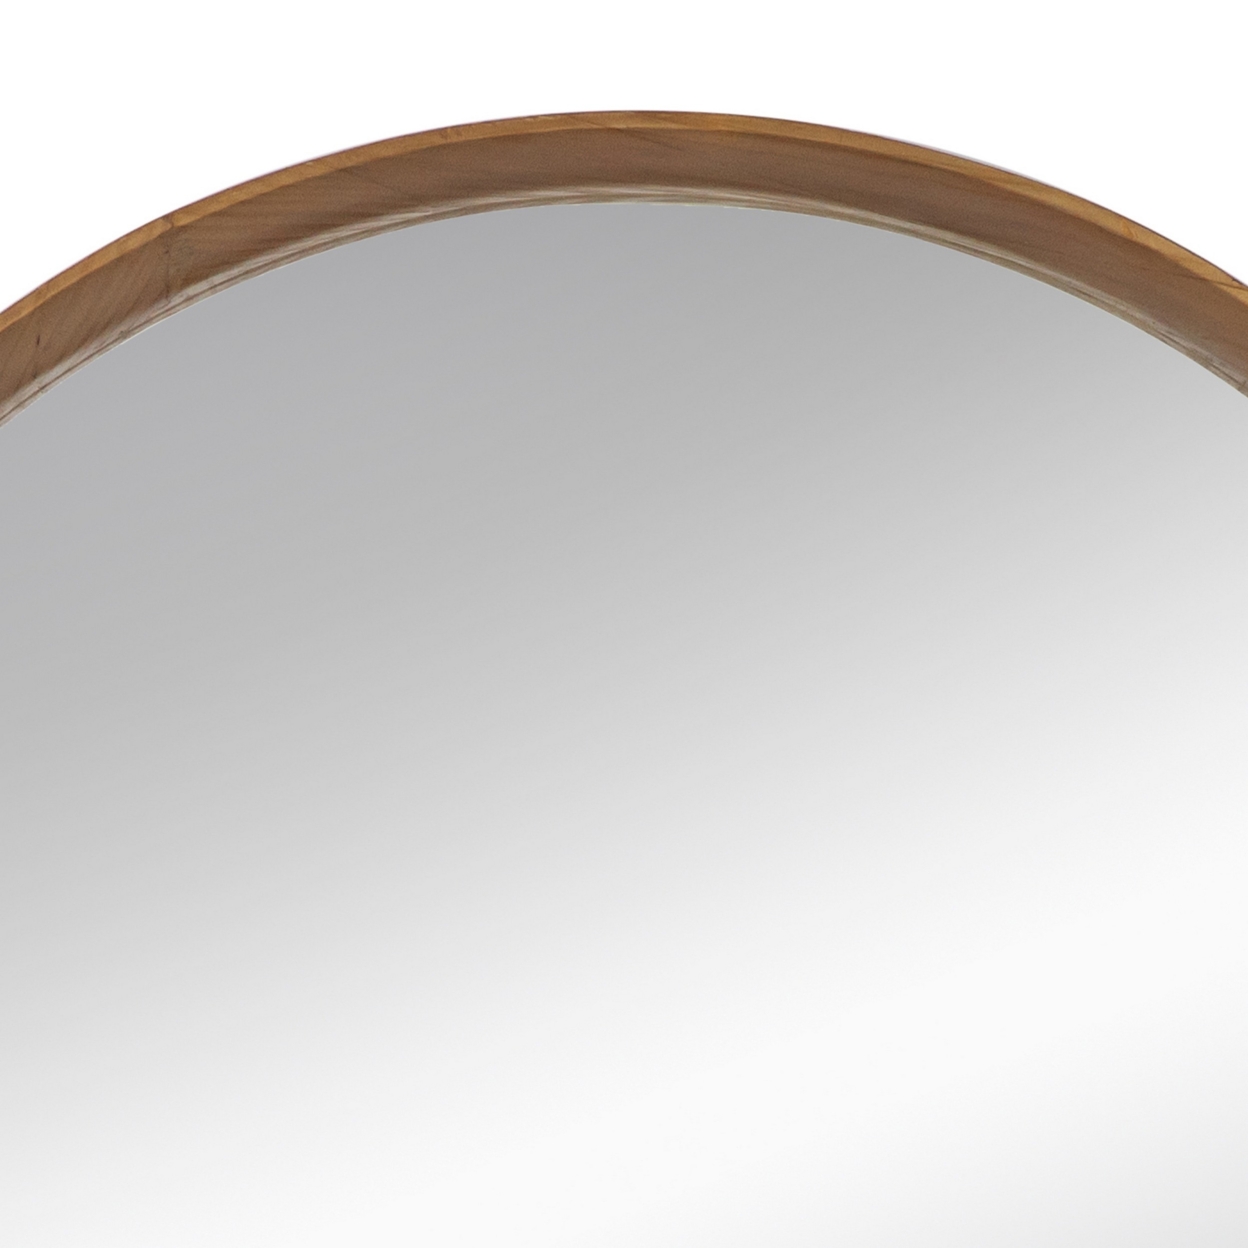 Roe 32 Inch Wall Mounted Round Mirror, Modern Brown Pine Wood Frame- Saltoro Sherpi